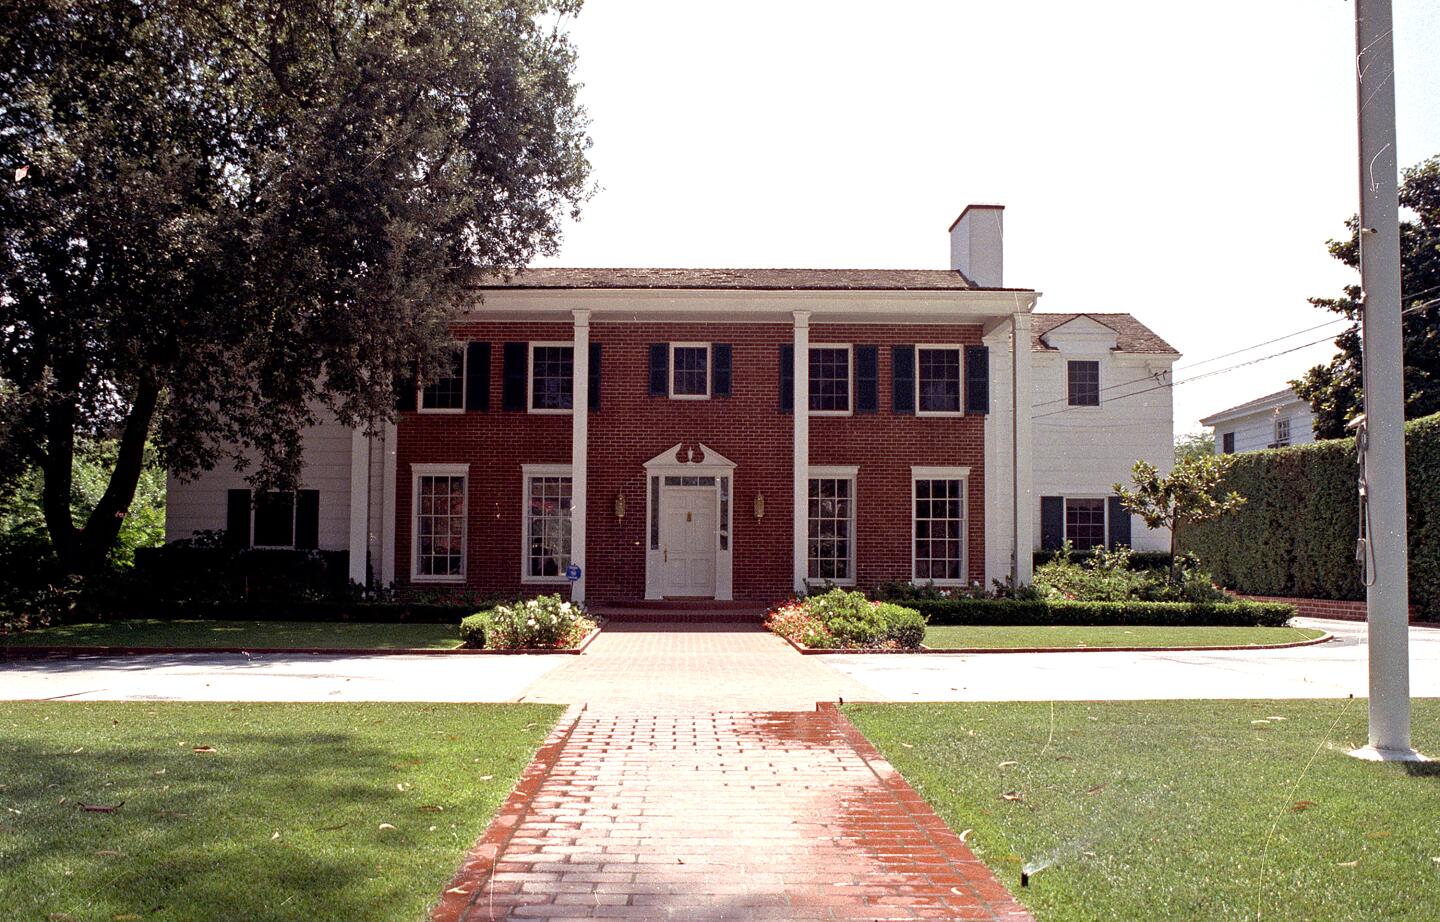 Daniel and Linda Broderick's house on Aug. 17, 1990.